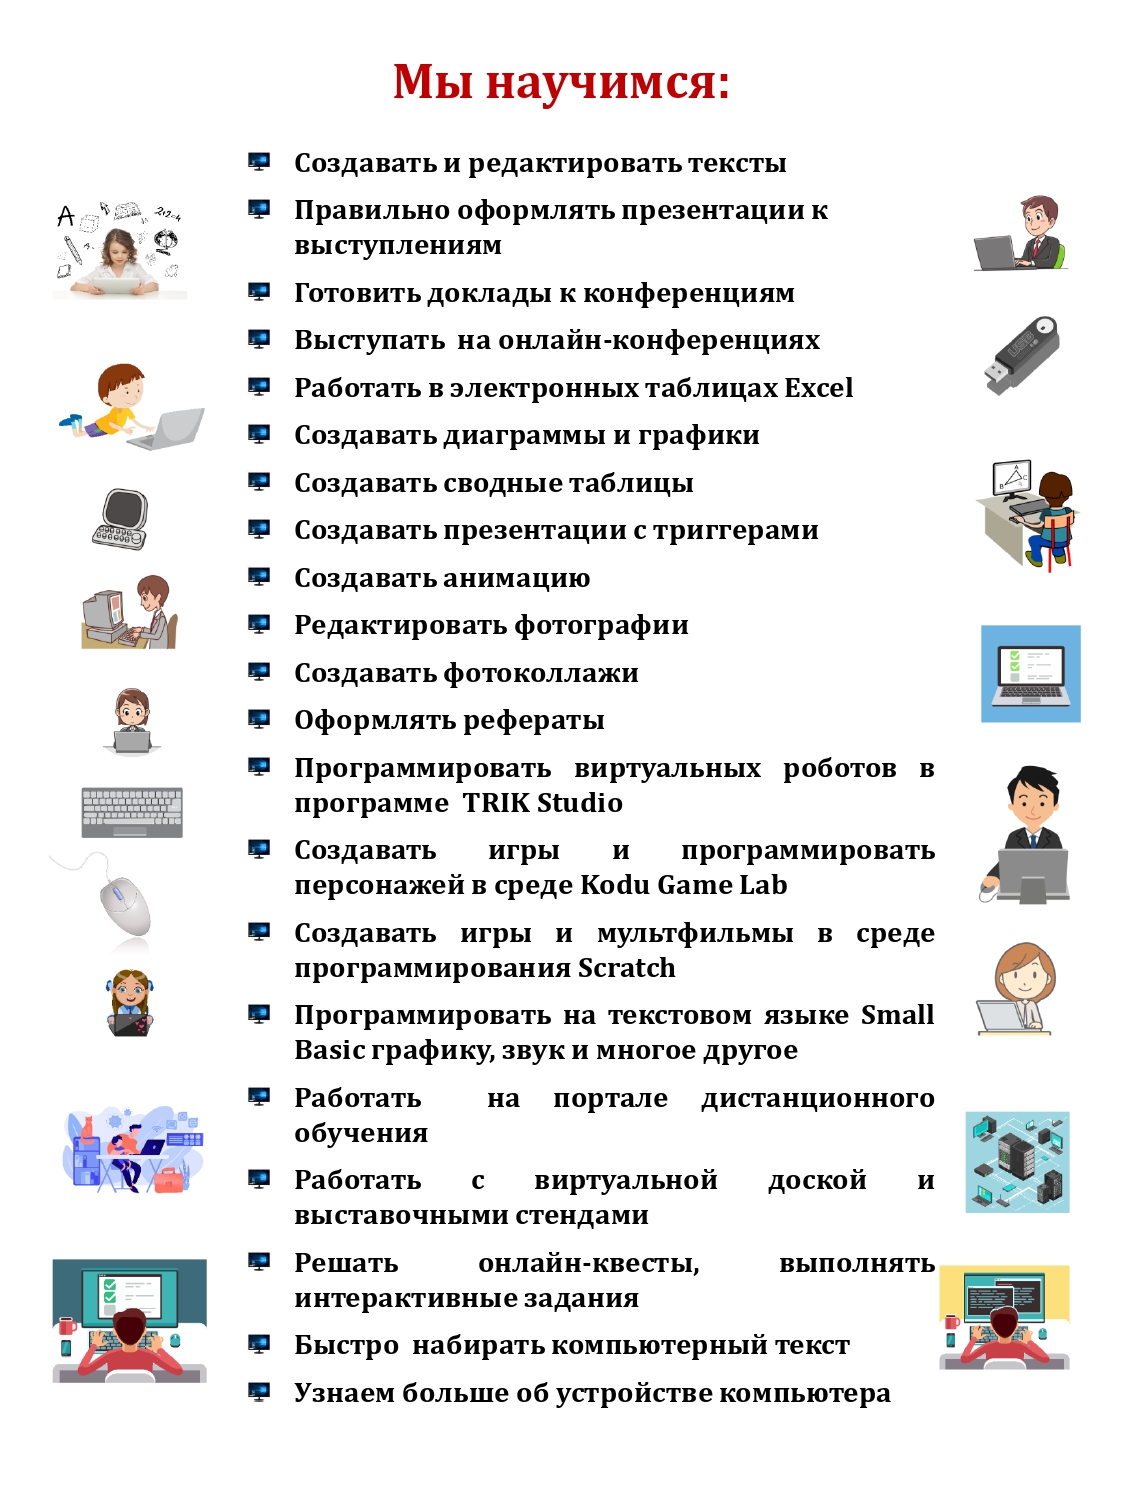 Reklamnaya papka Moy pomoschnik kompyuter page 0003